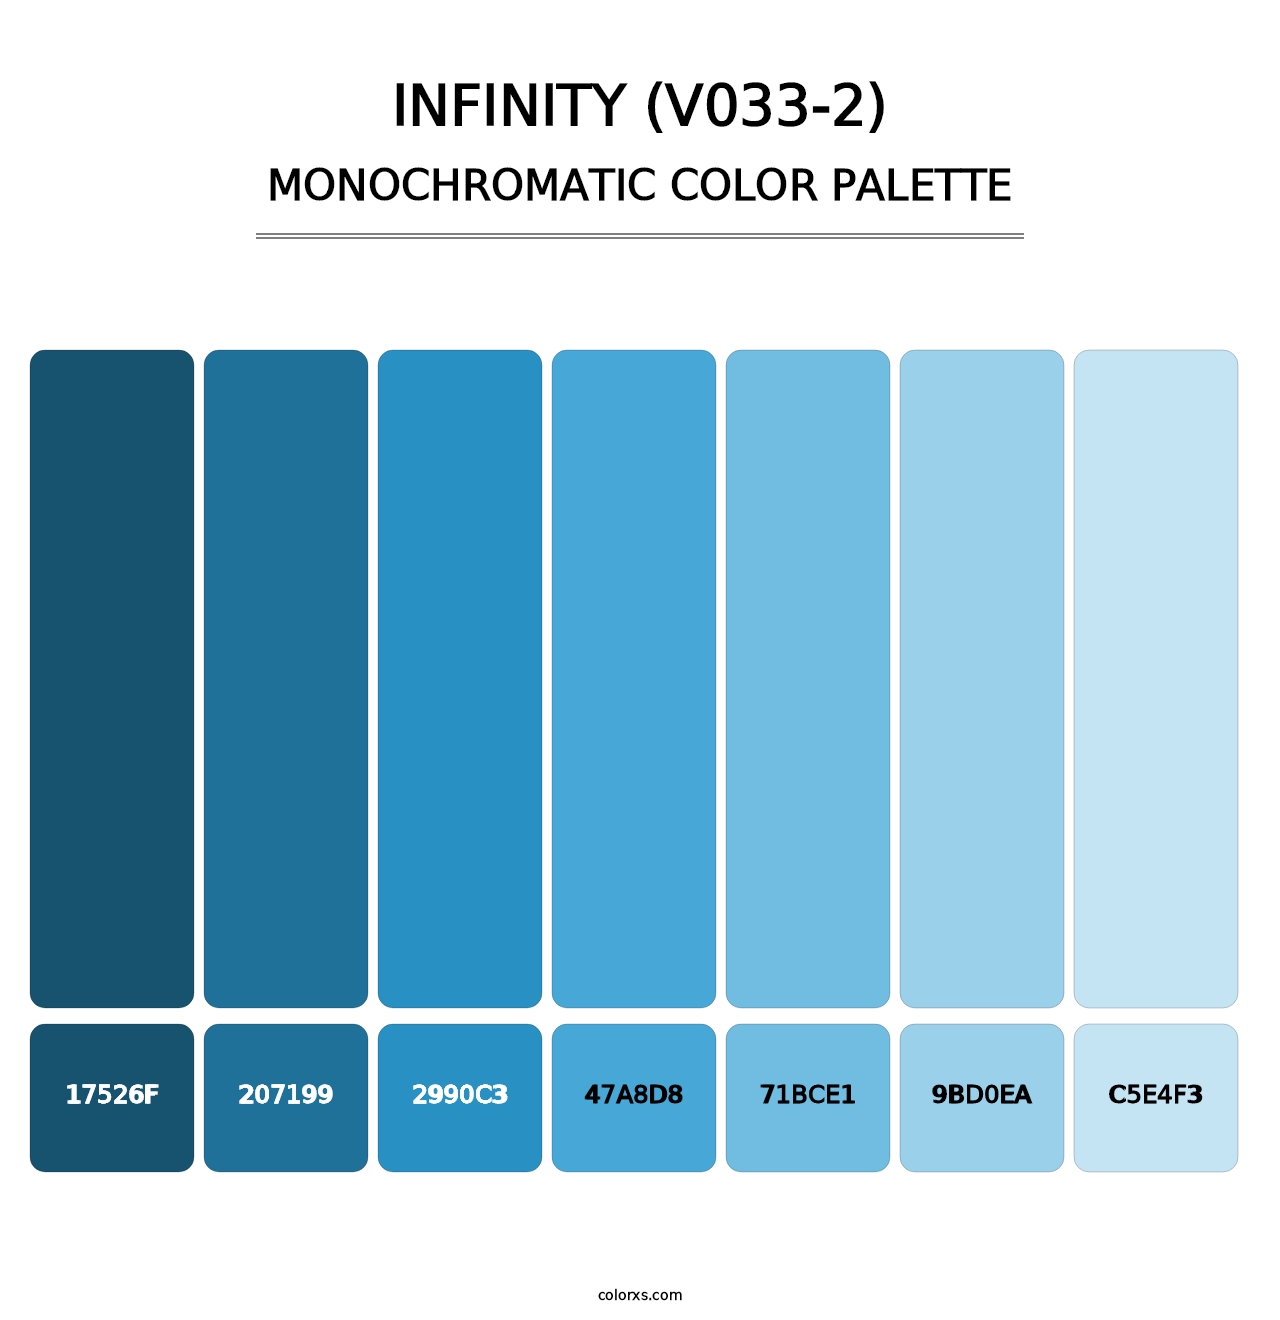 Infinity (V033-2) - Monochromatic Color Palette